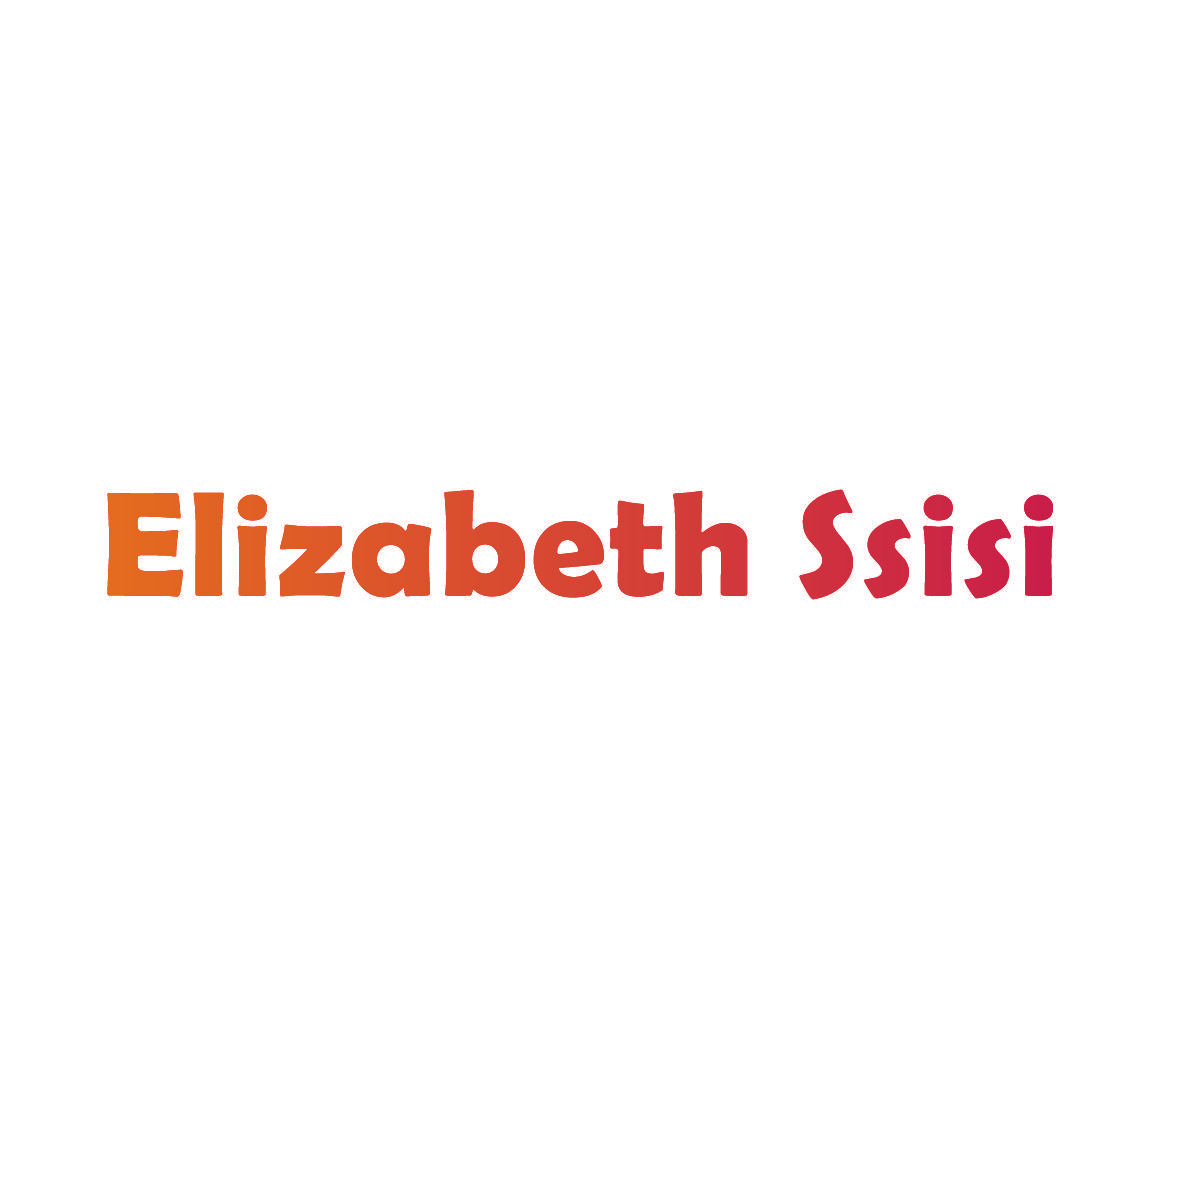 ELIZABETH SSISI